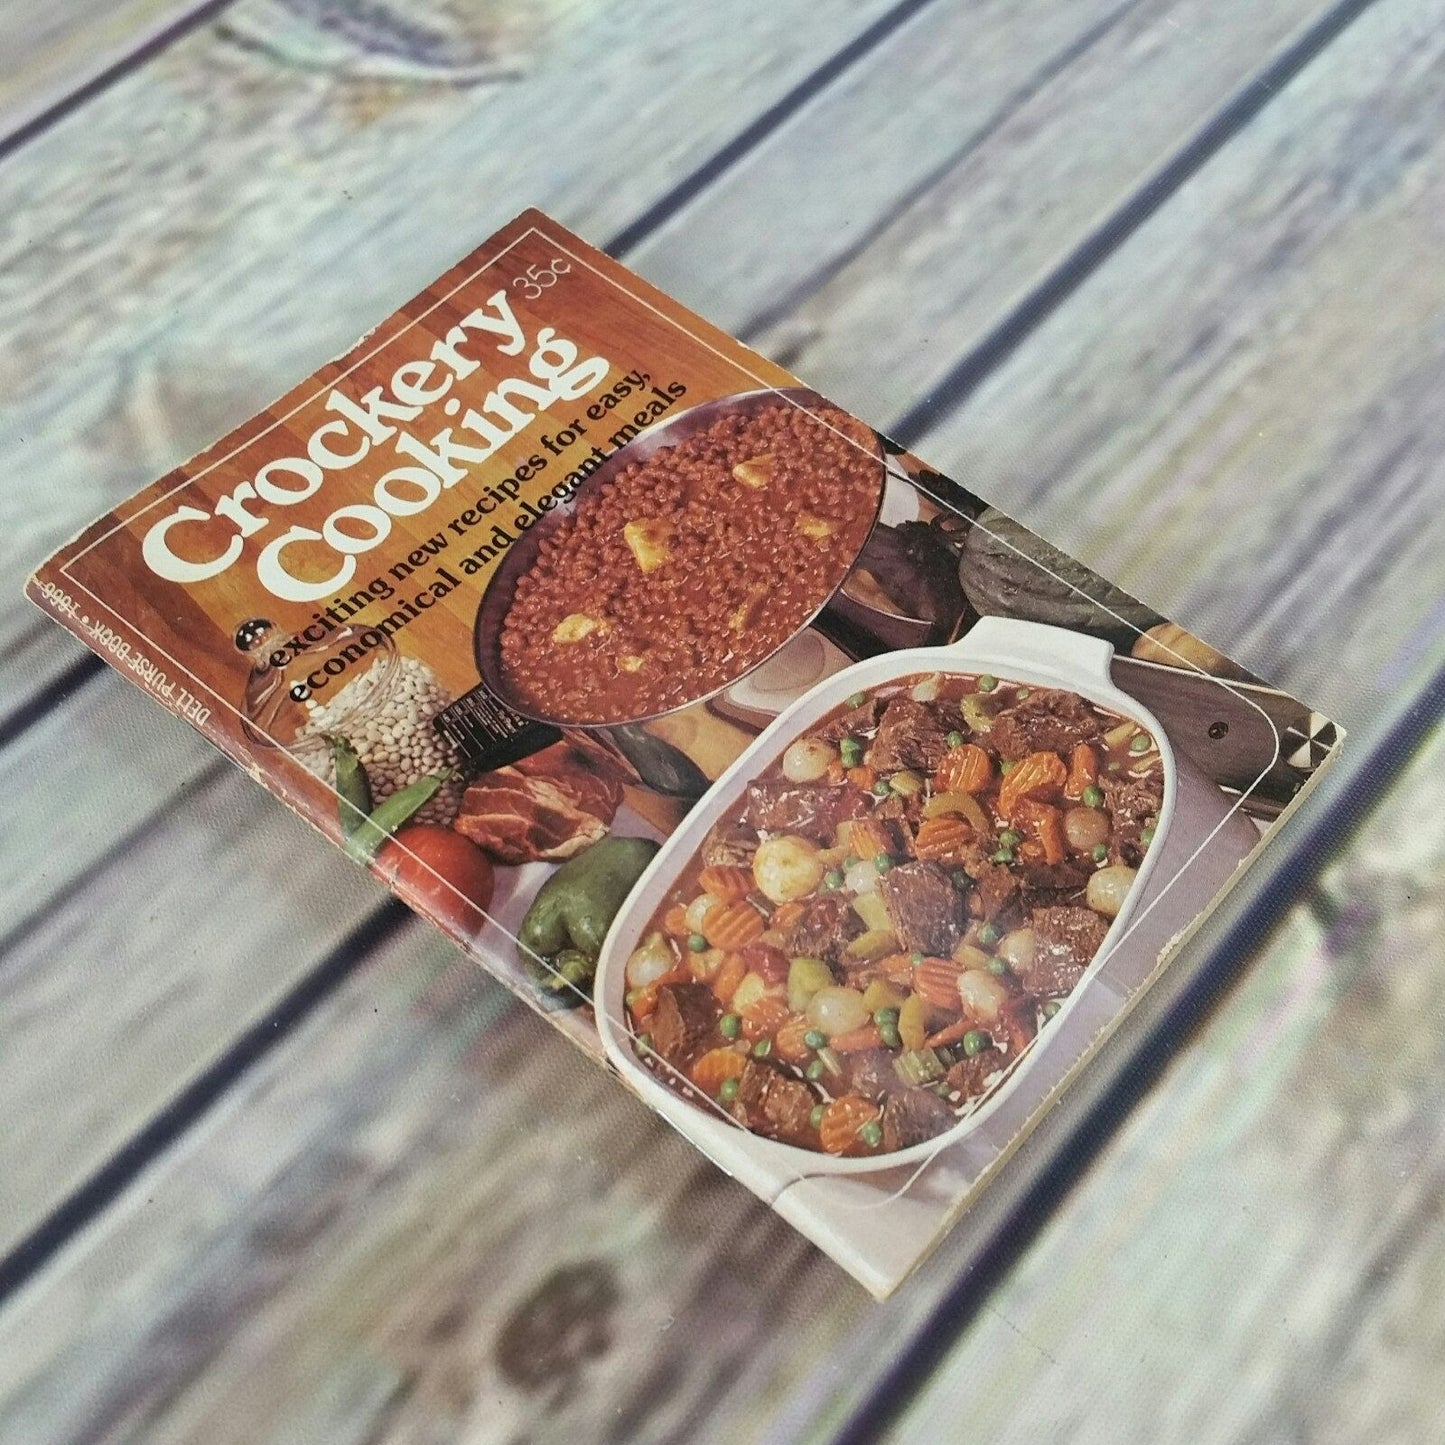 Vintage Cookbook Crockery Cooking Recipes Dell Purse Book 1976 Paperback Booklet Slow Cooker